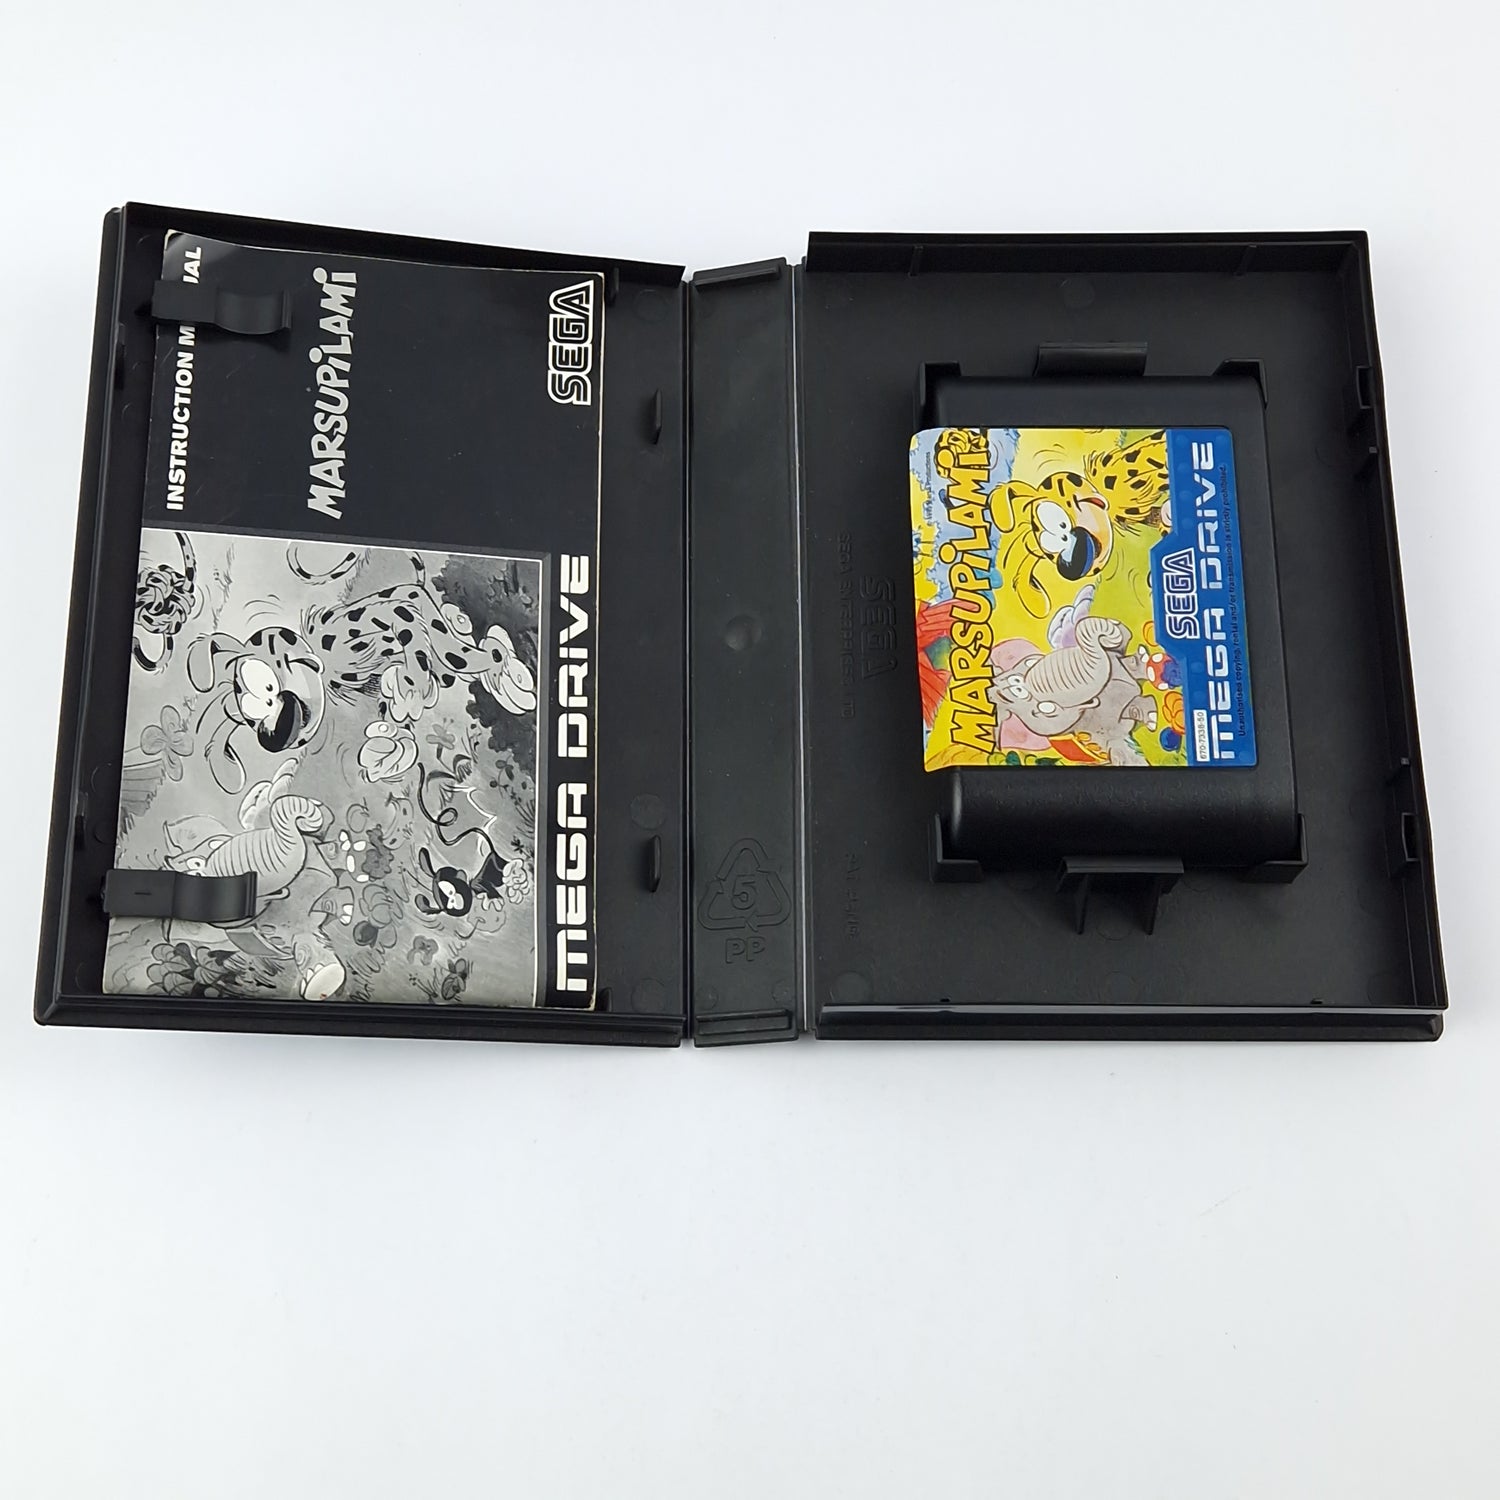 Sega Mega Drive Game: Marsupilami - Module Instructions OVP cib / PAL MD GAME